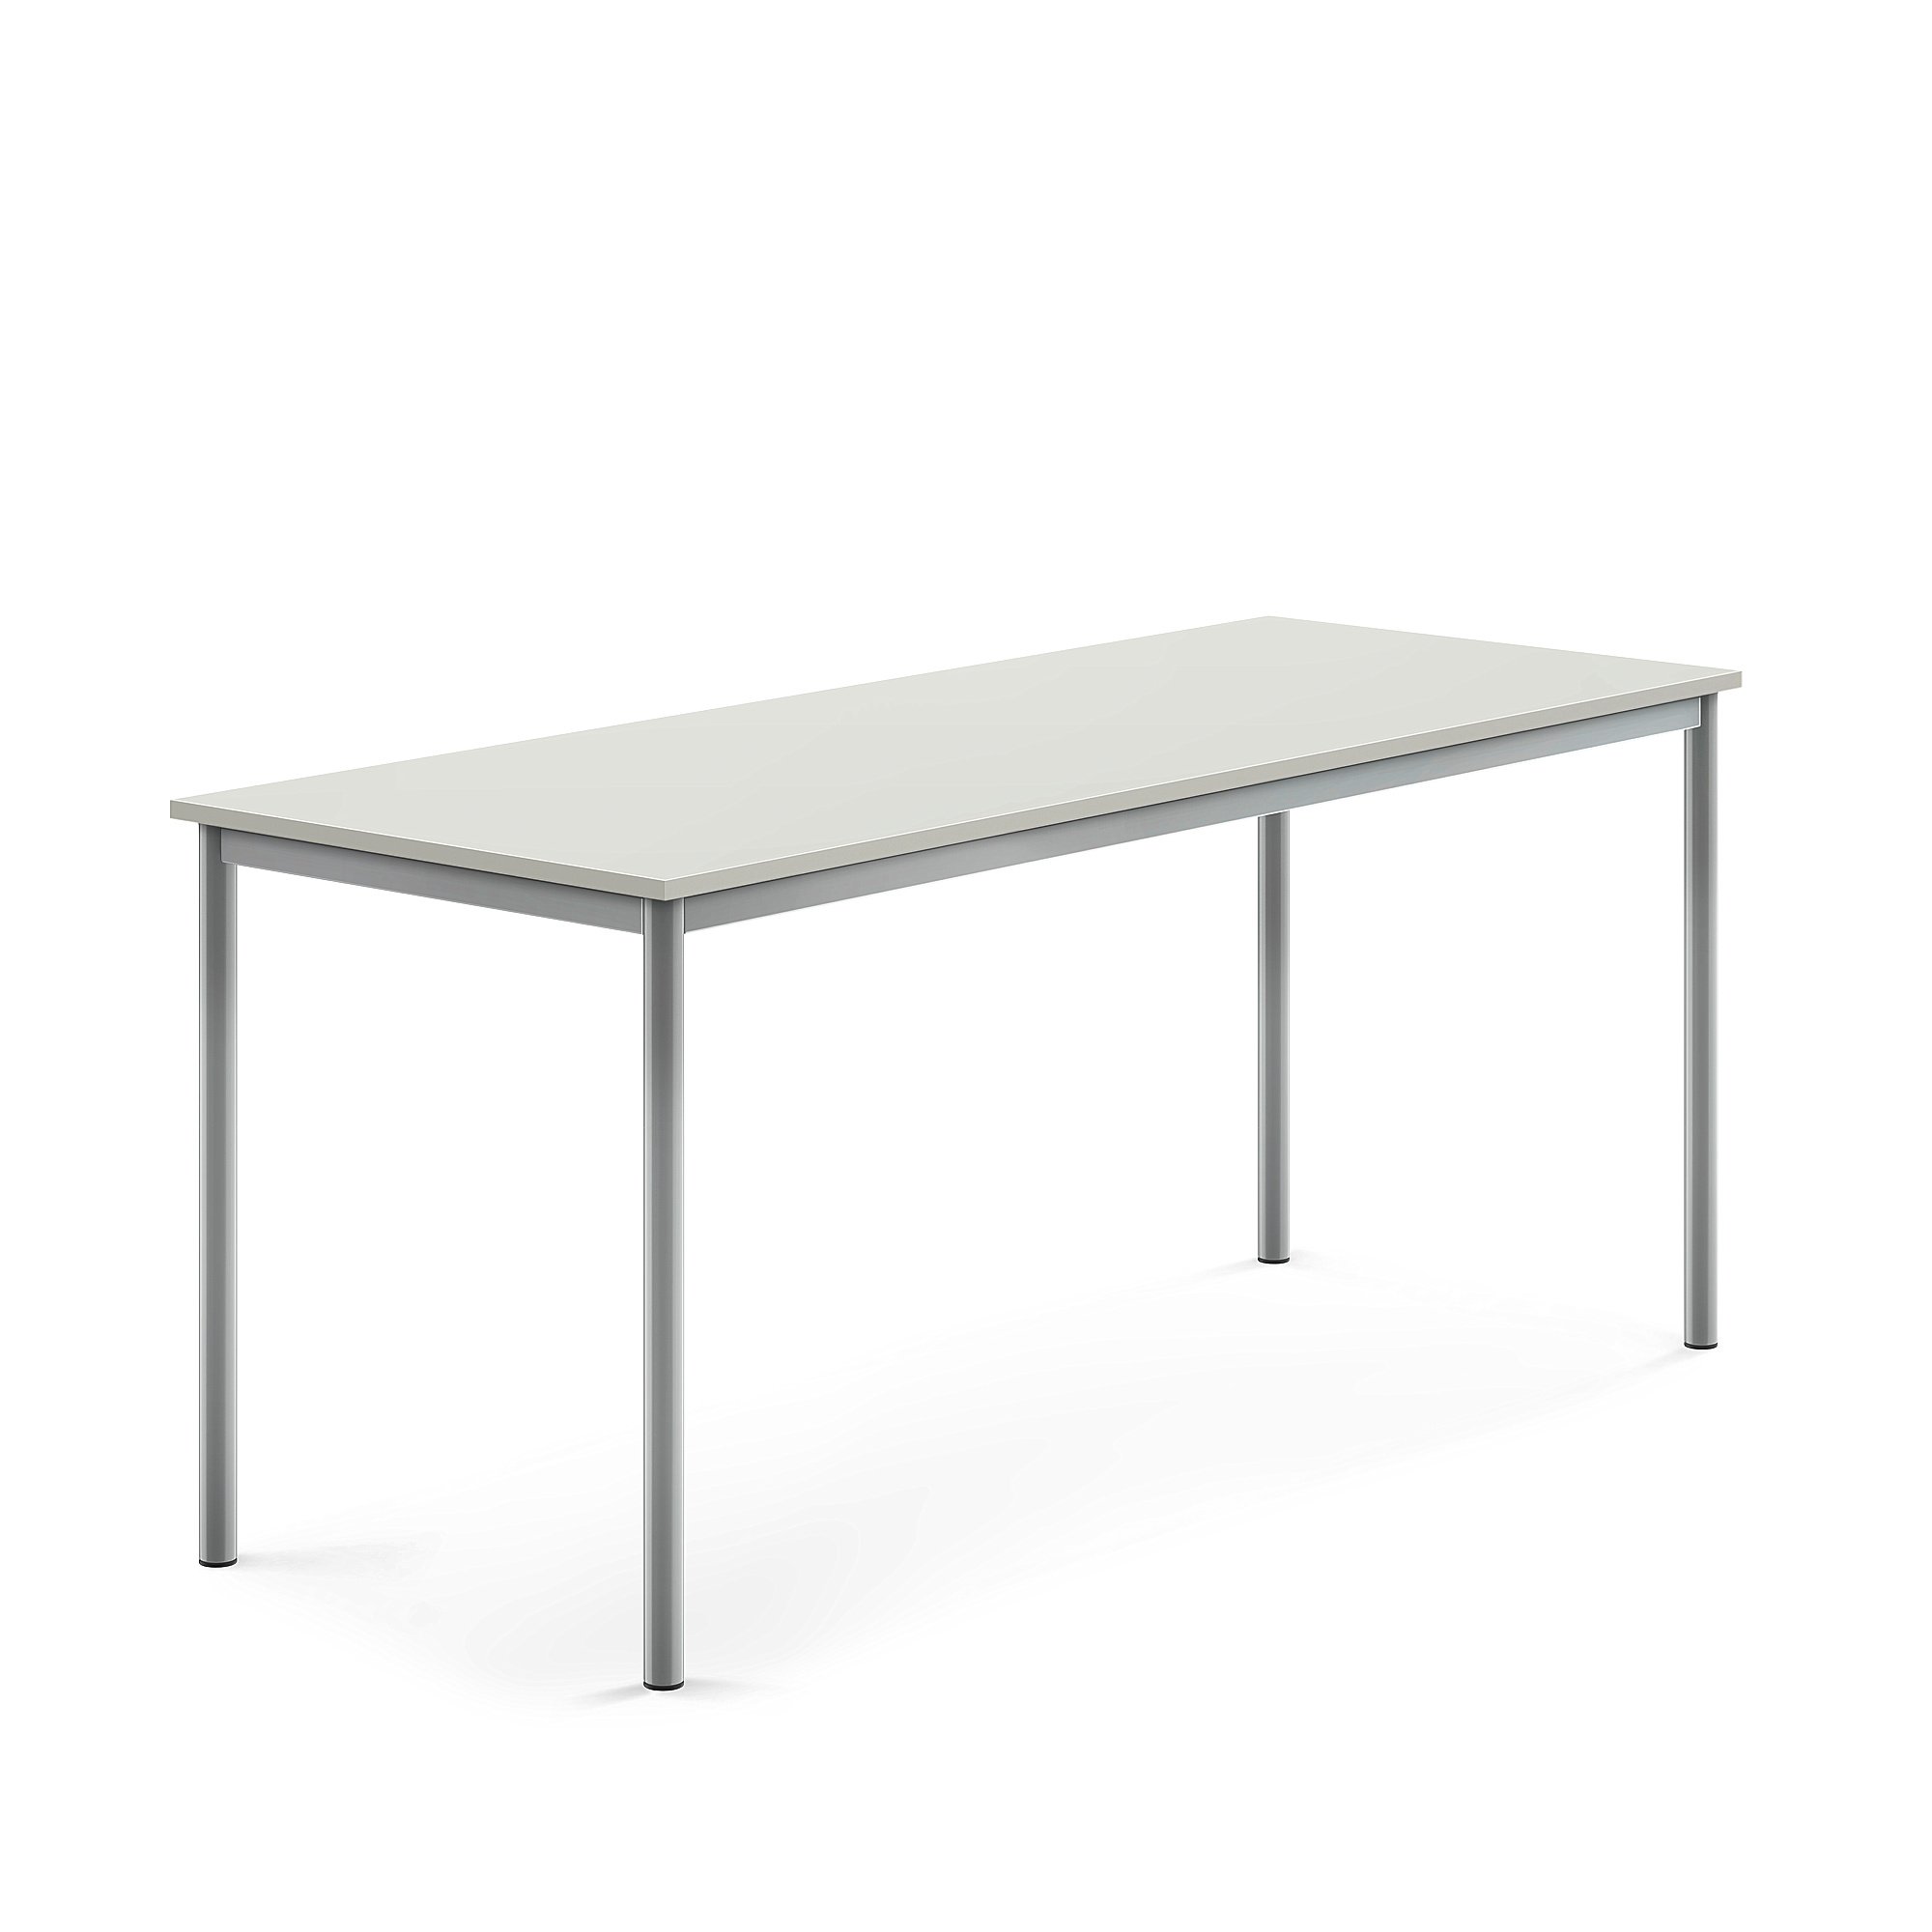 Stůl SONITUS, 1800x700x760 mm, stříbrné nohy, HPL deska tlumící hluk, šedá